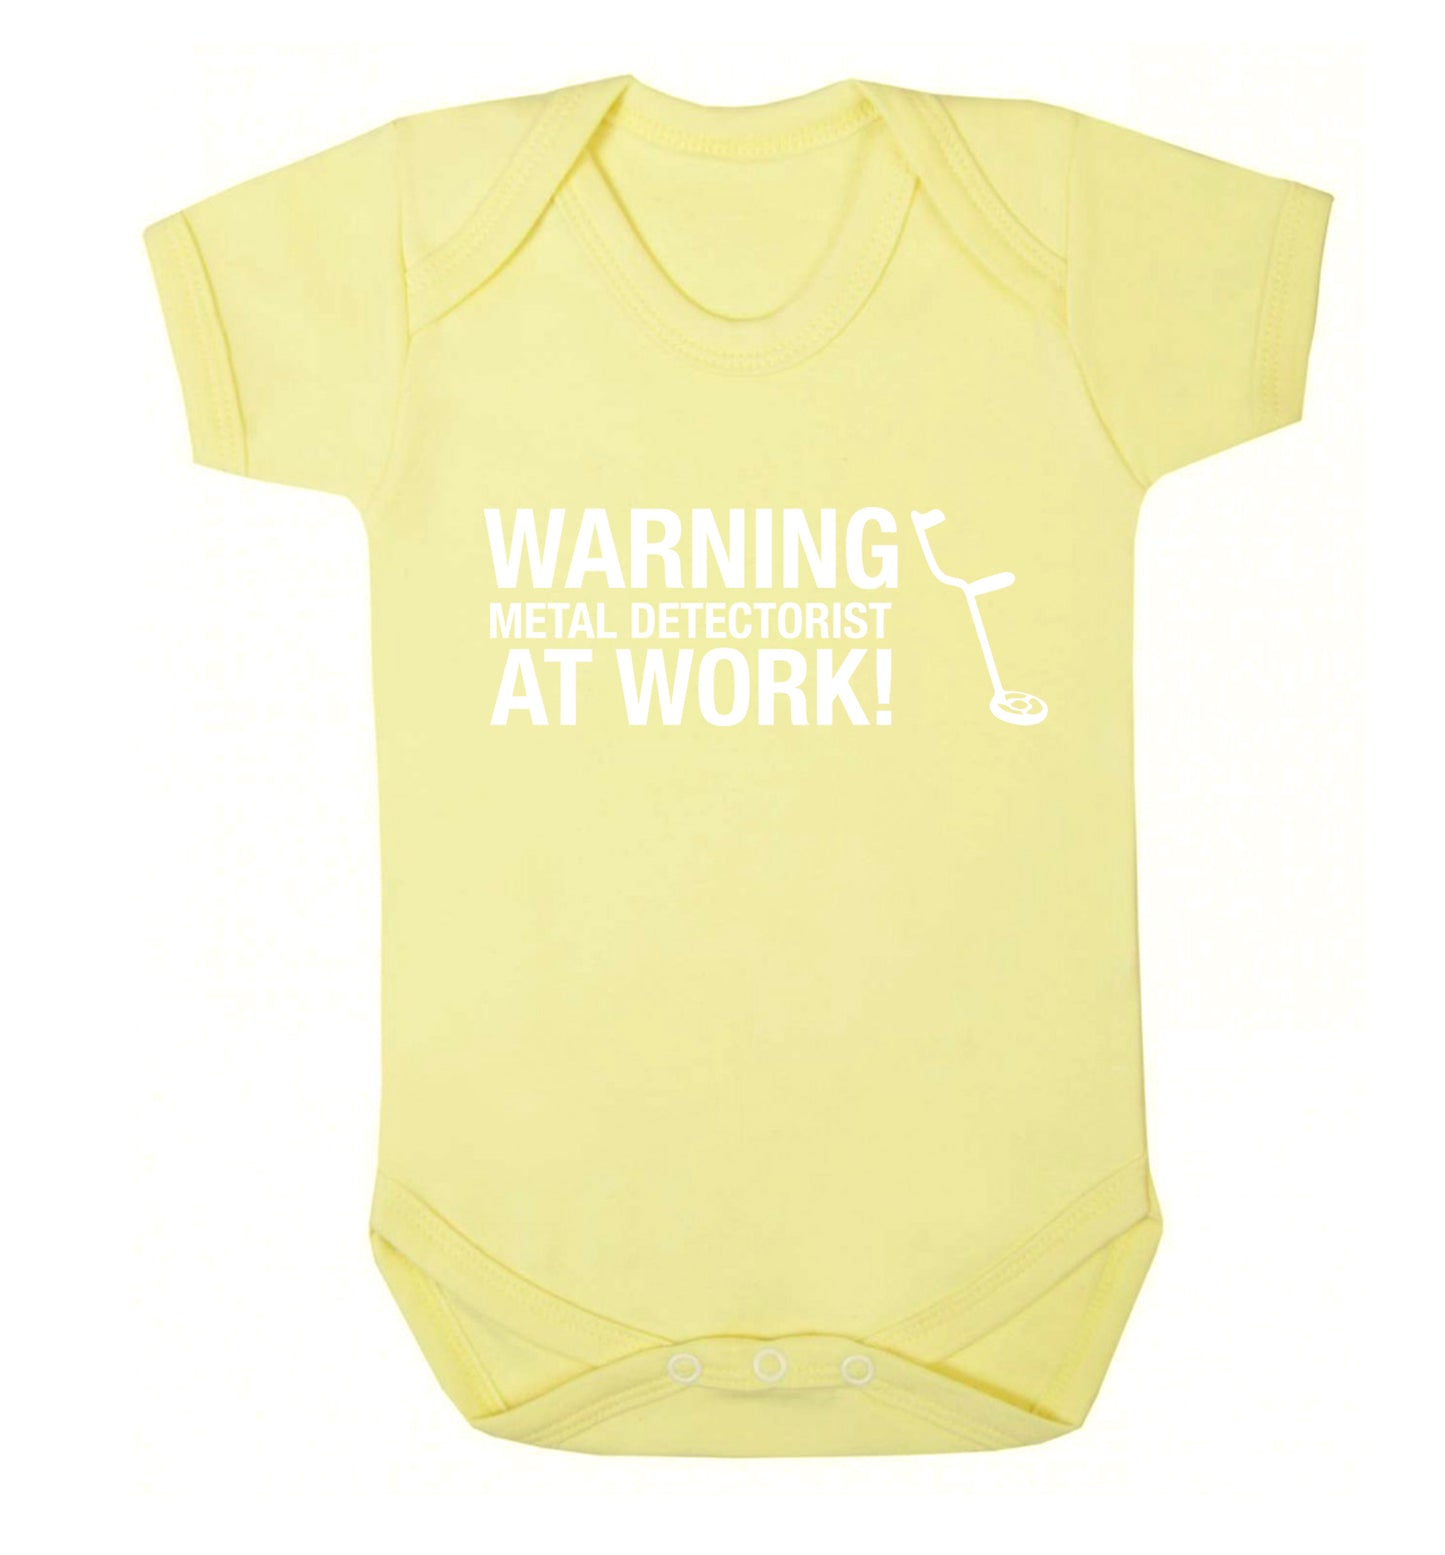 Warning metal detectorist at work! Baby Vest pale yellow 18-24 months